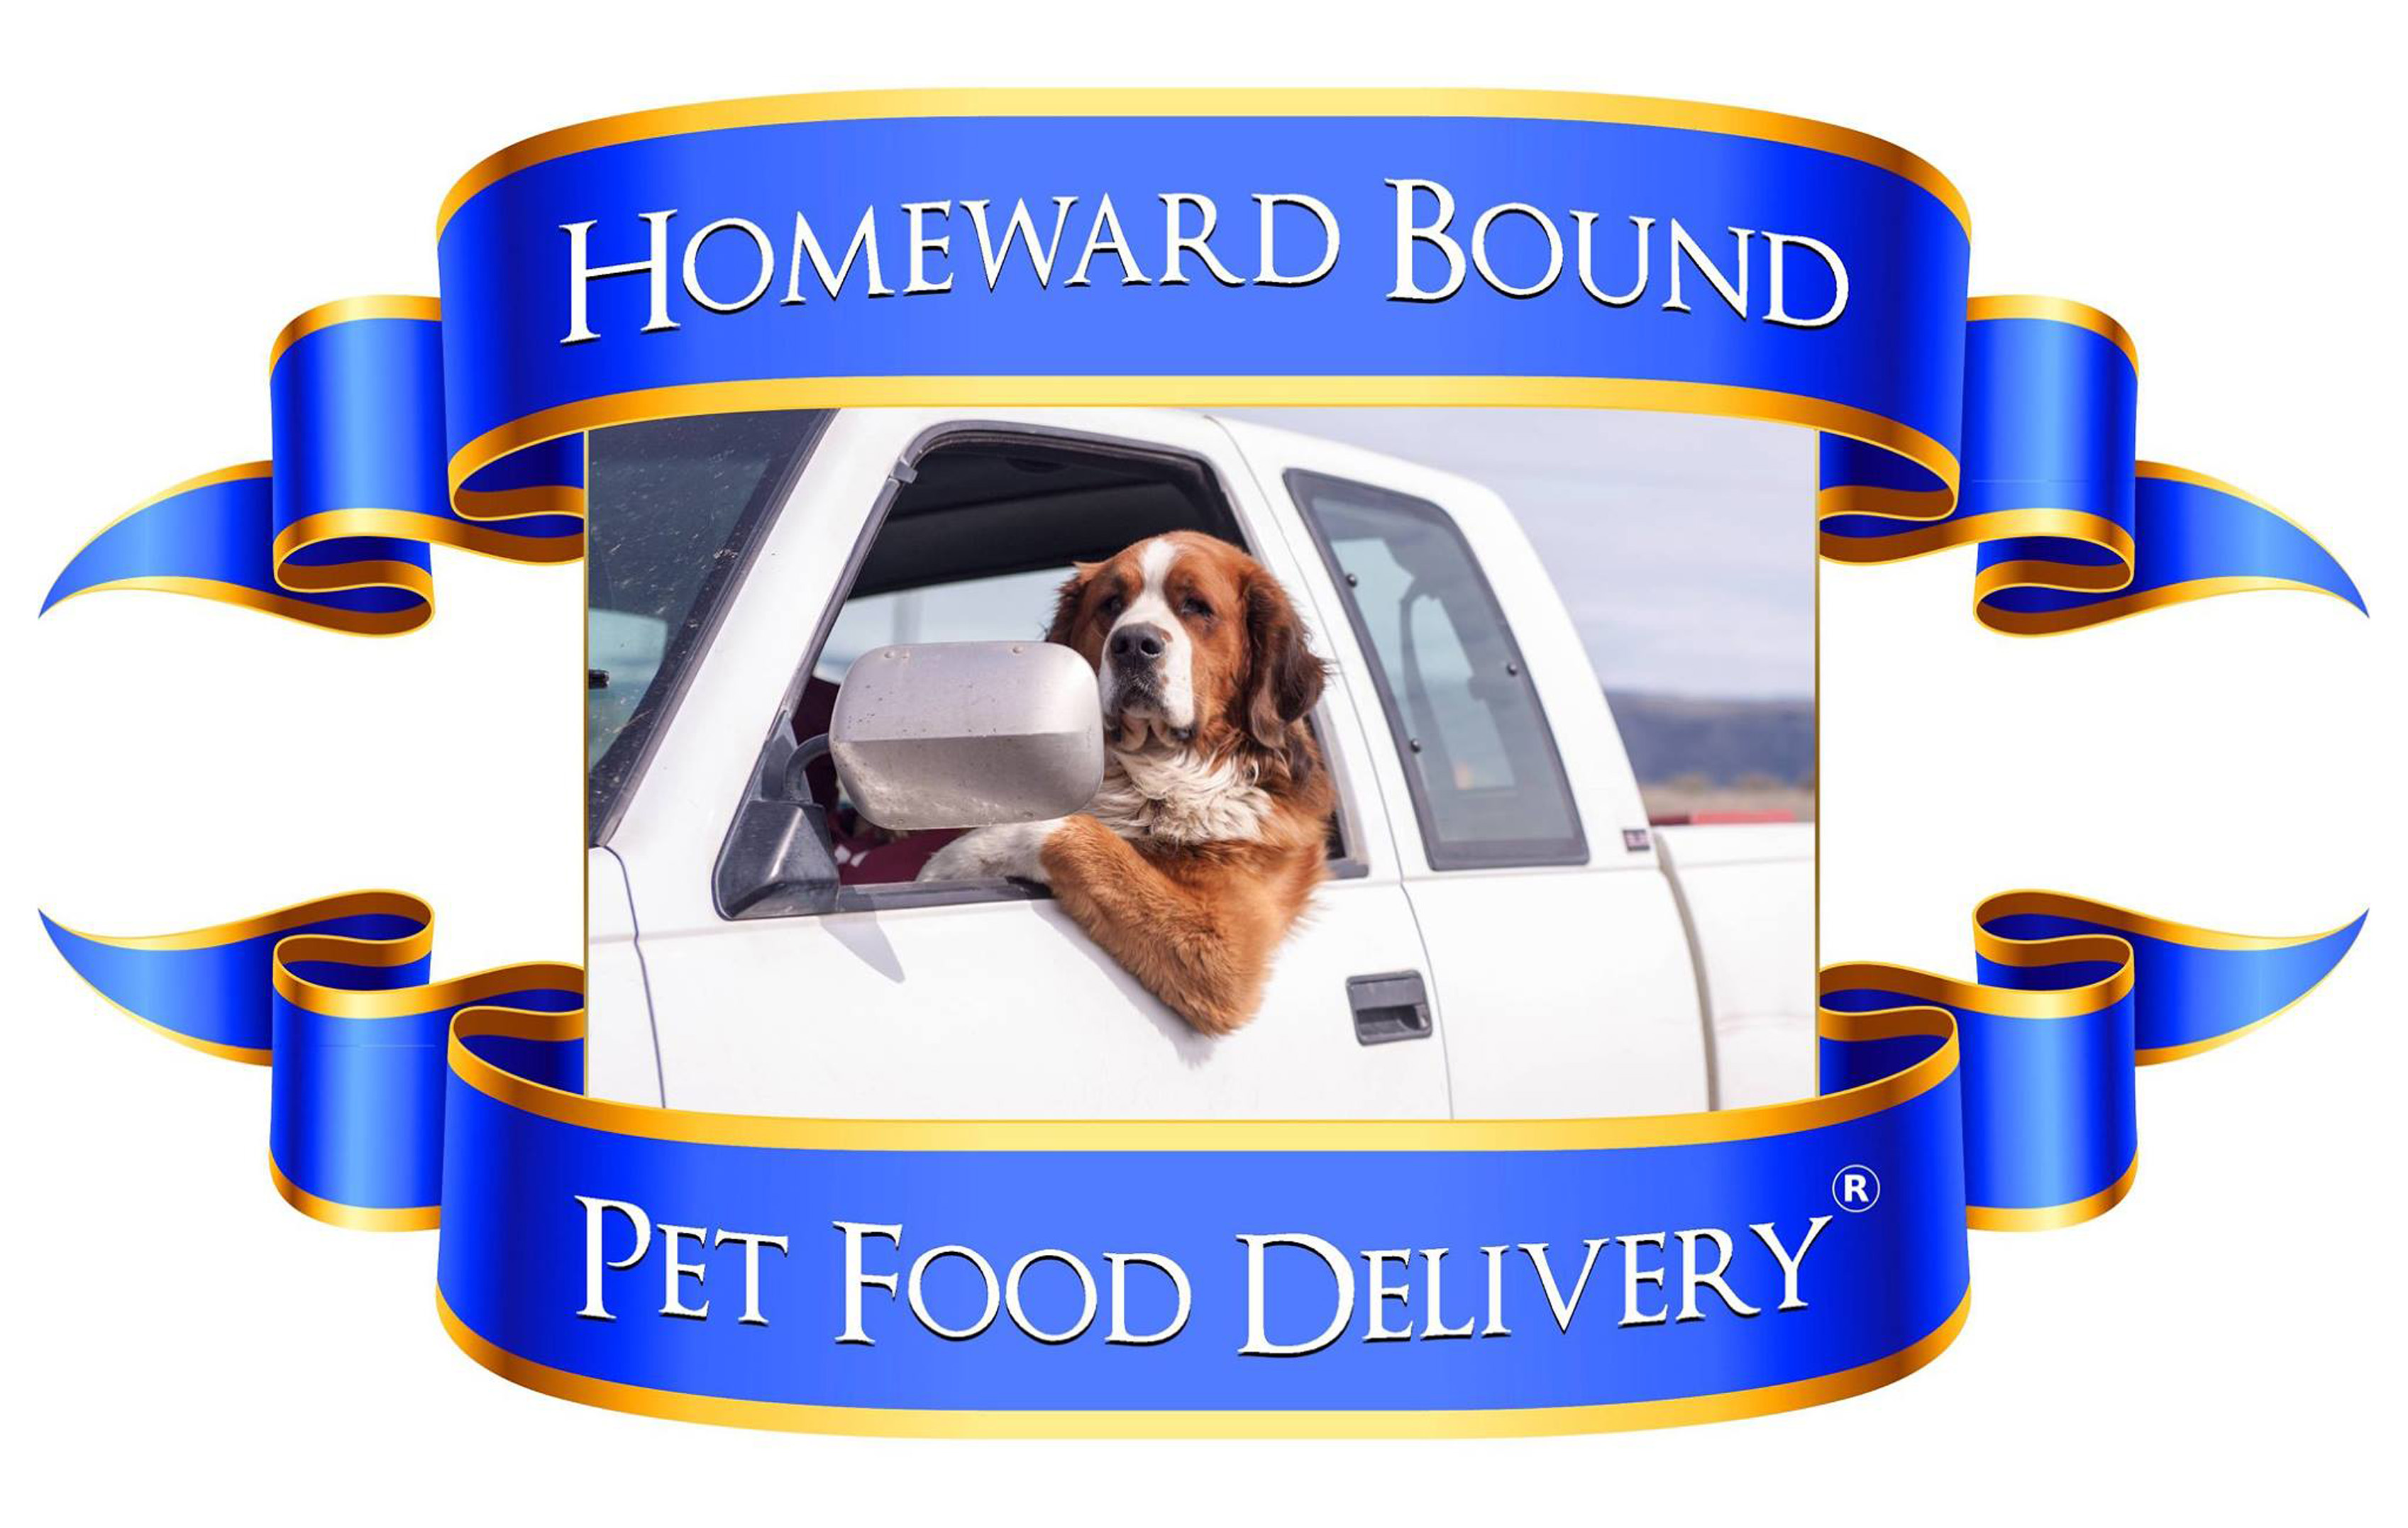 Homeward Bound Pet Food Delivery Halifax logo